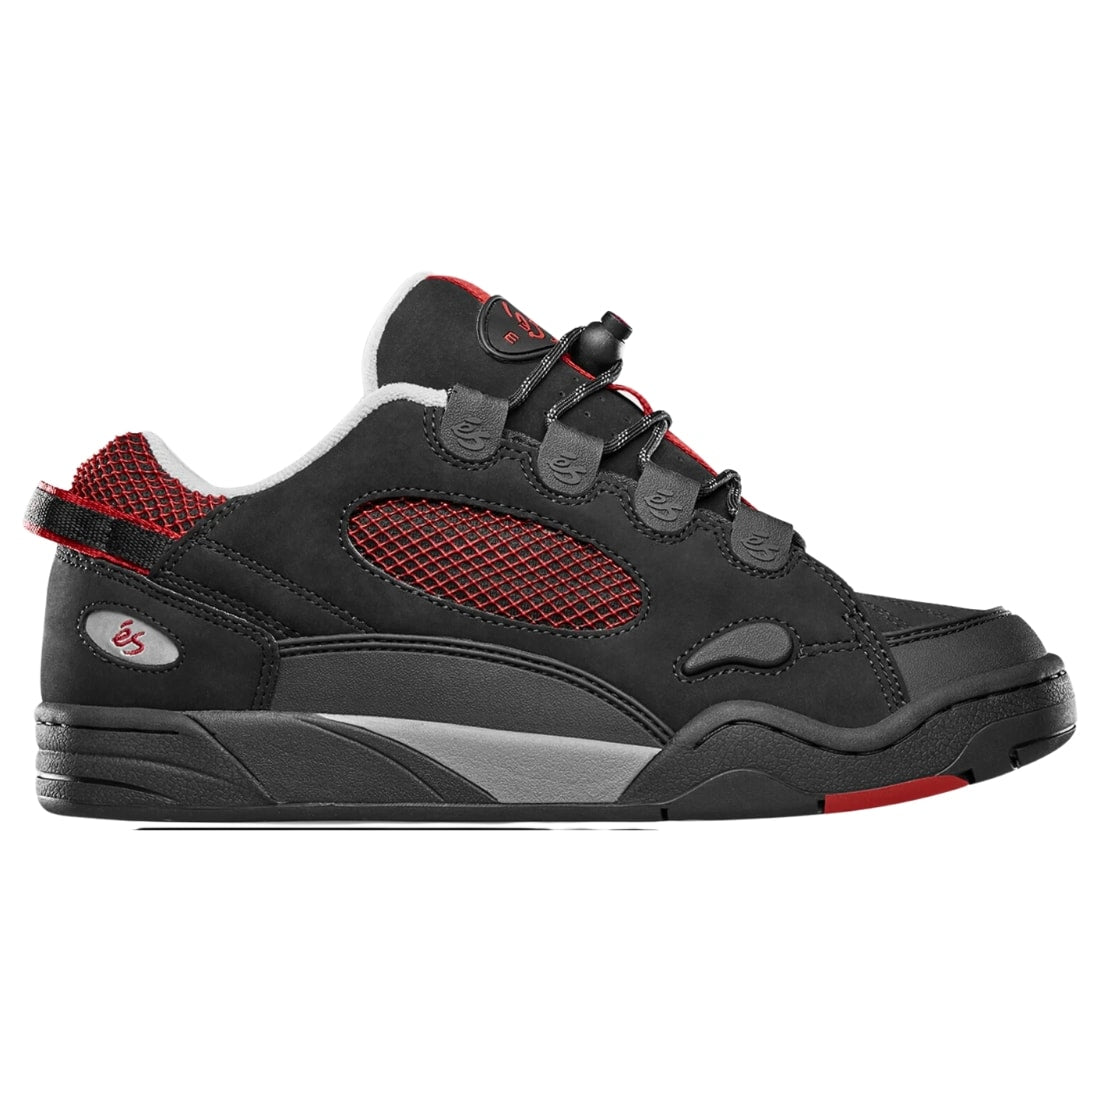 eS Muska Skate Shoes - Black/Red